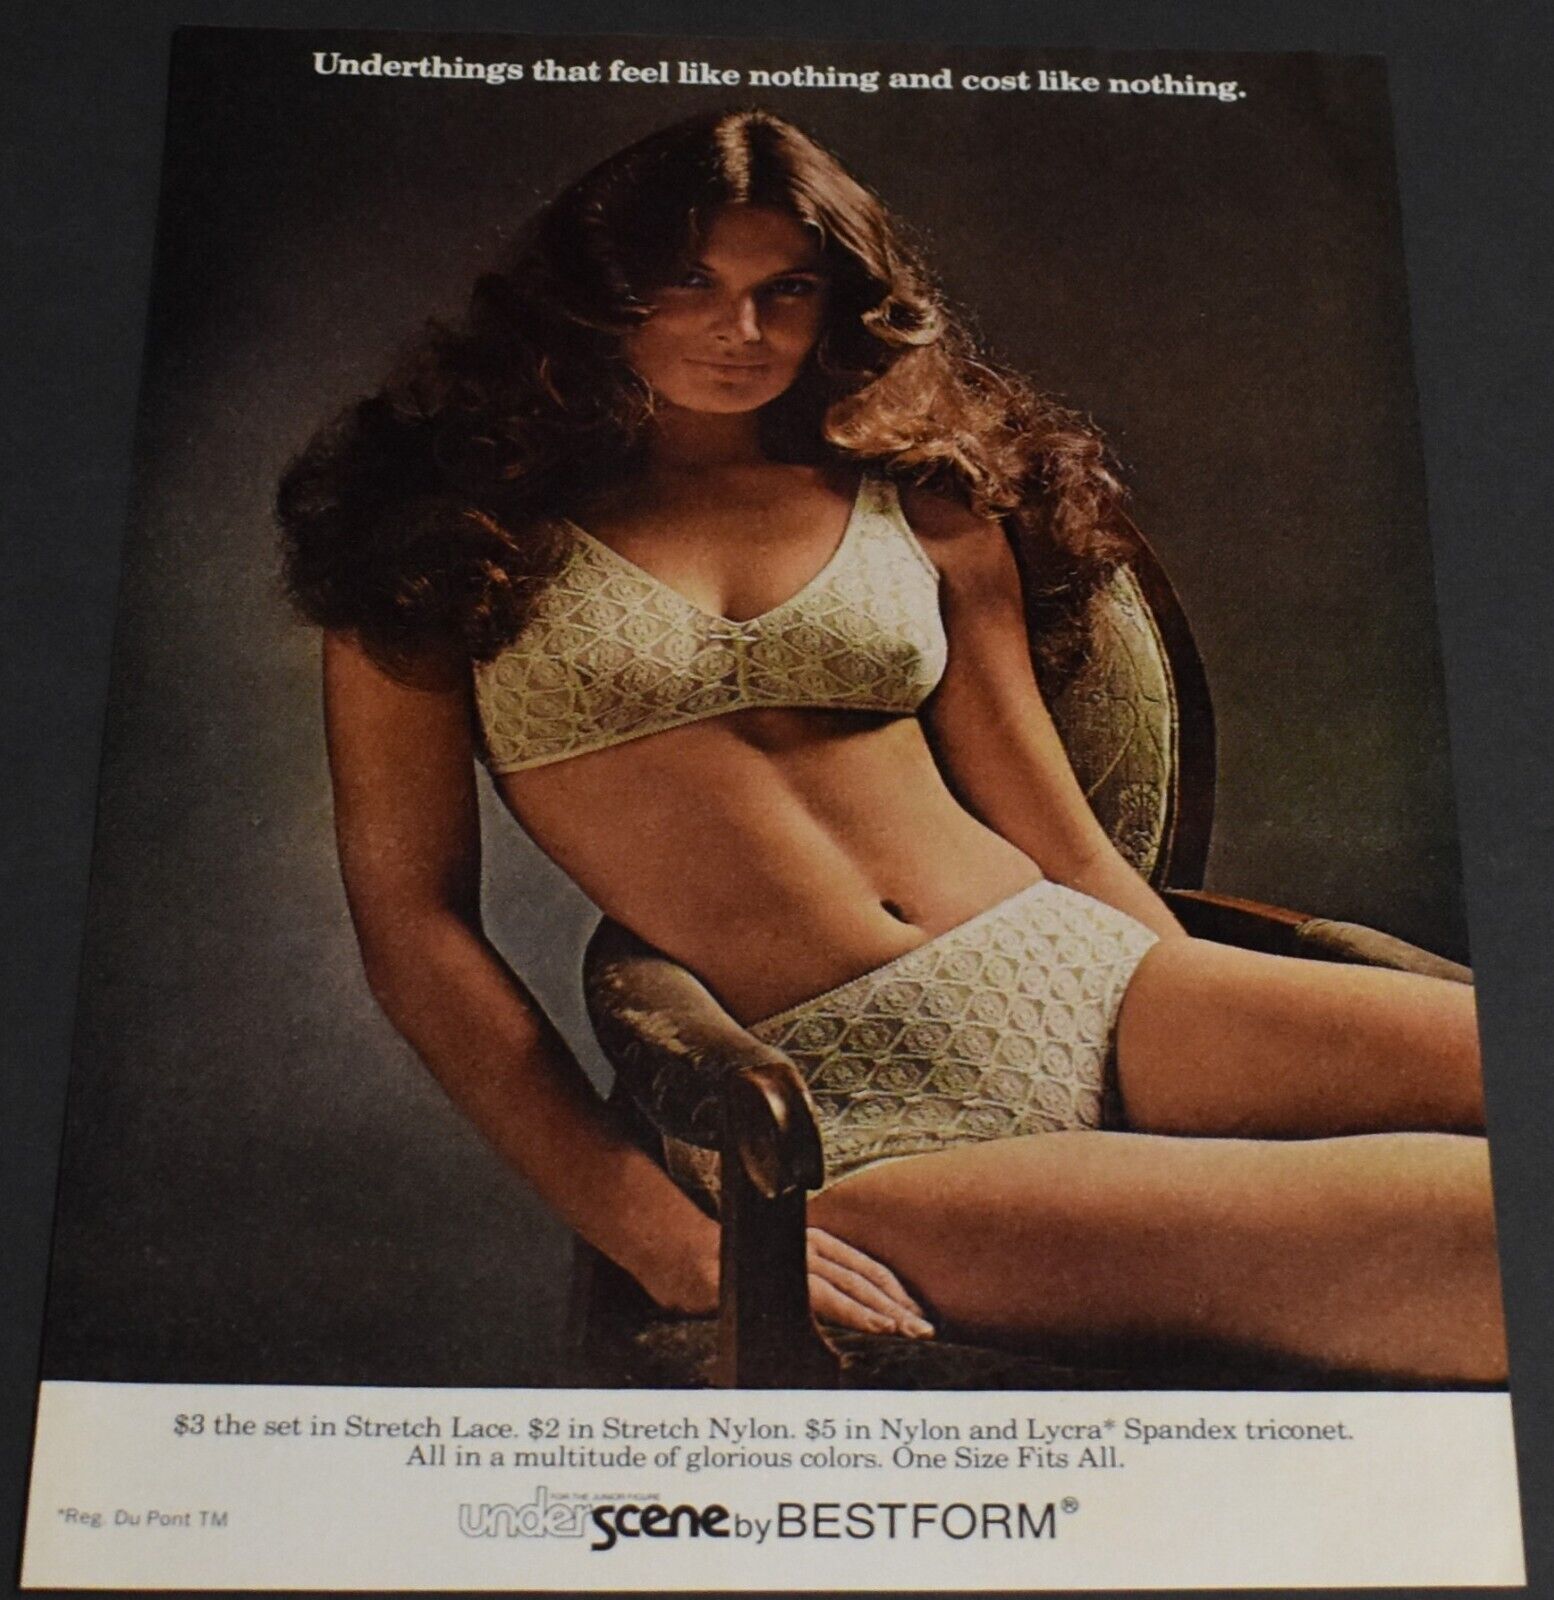 1971 Print Ad Sexy Bestform Bra Brunette Lady Beauty Art Feminine Panties Chair